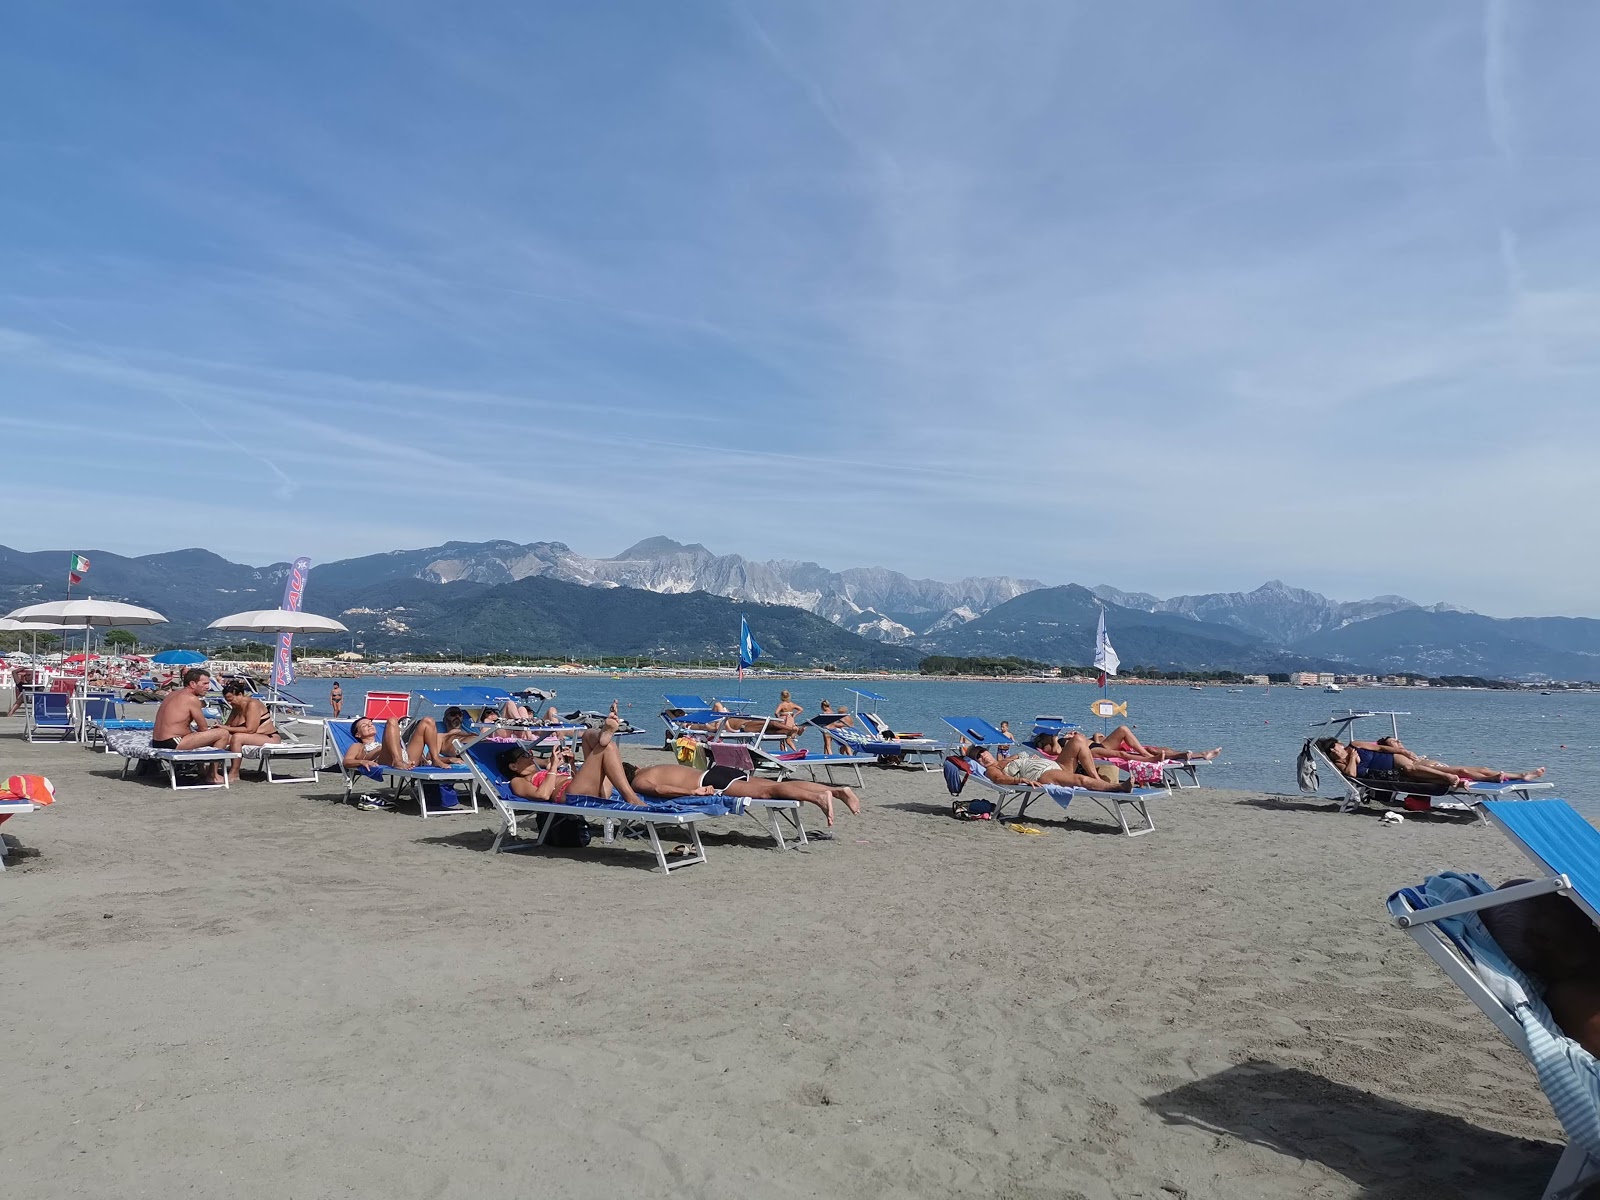 Foto av Spiaggia di Fiumaretta med rymliga multifack